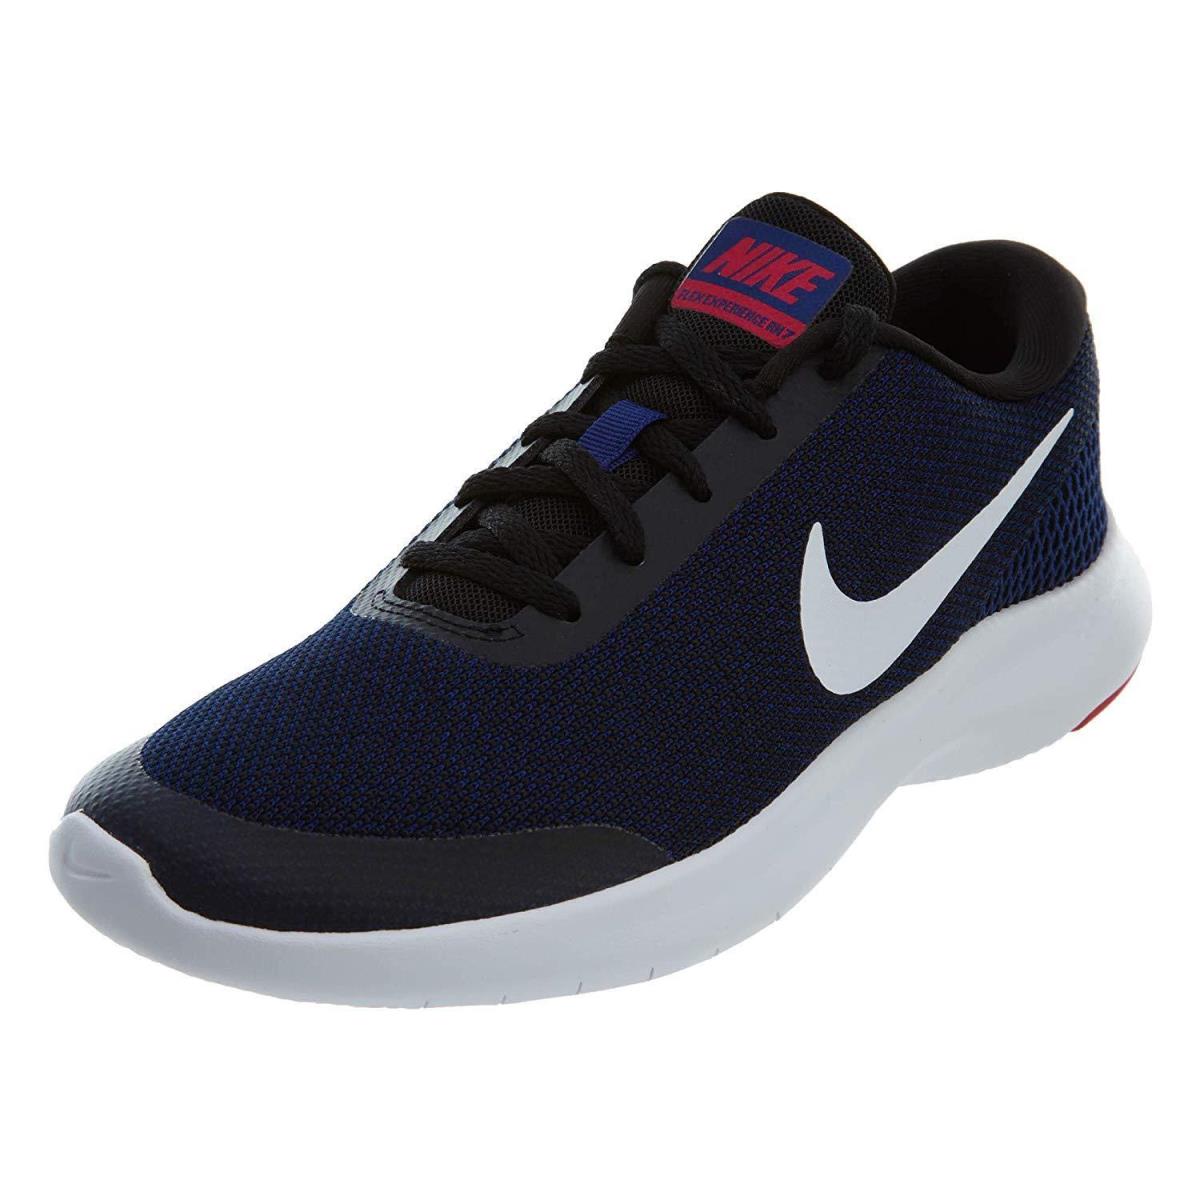 Women`s Nike Flex Experience RN 7 Running Shoes 908996 008 Mult Sizes Blk/wht/b - Black/White/Deep Royal Blue